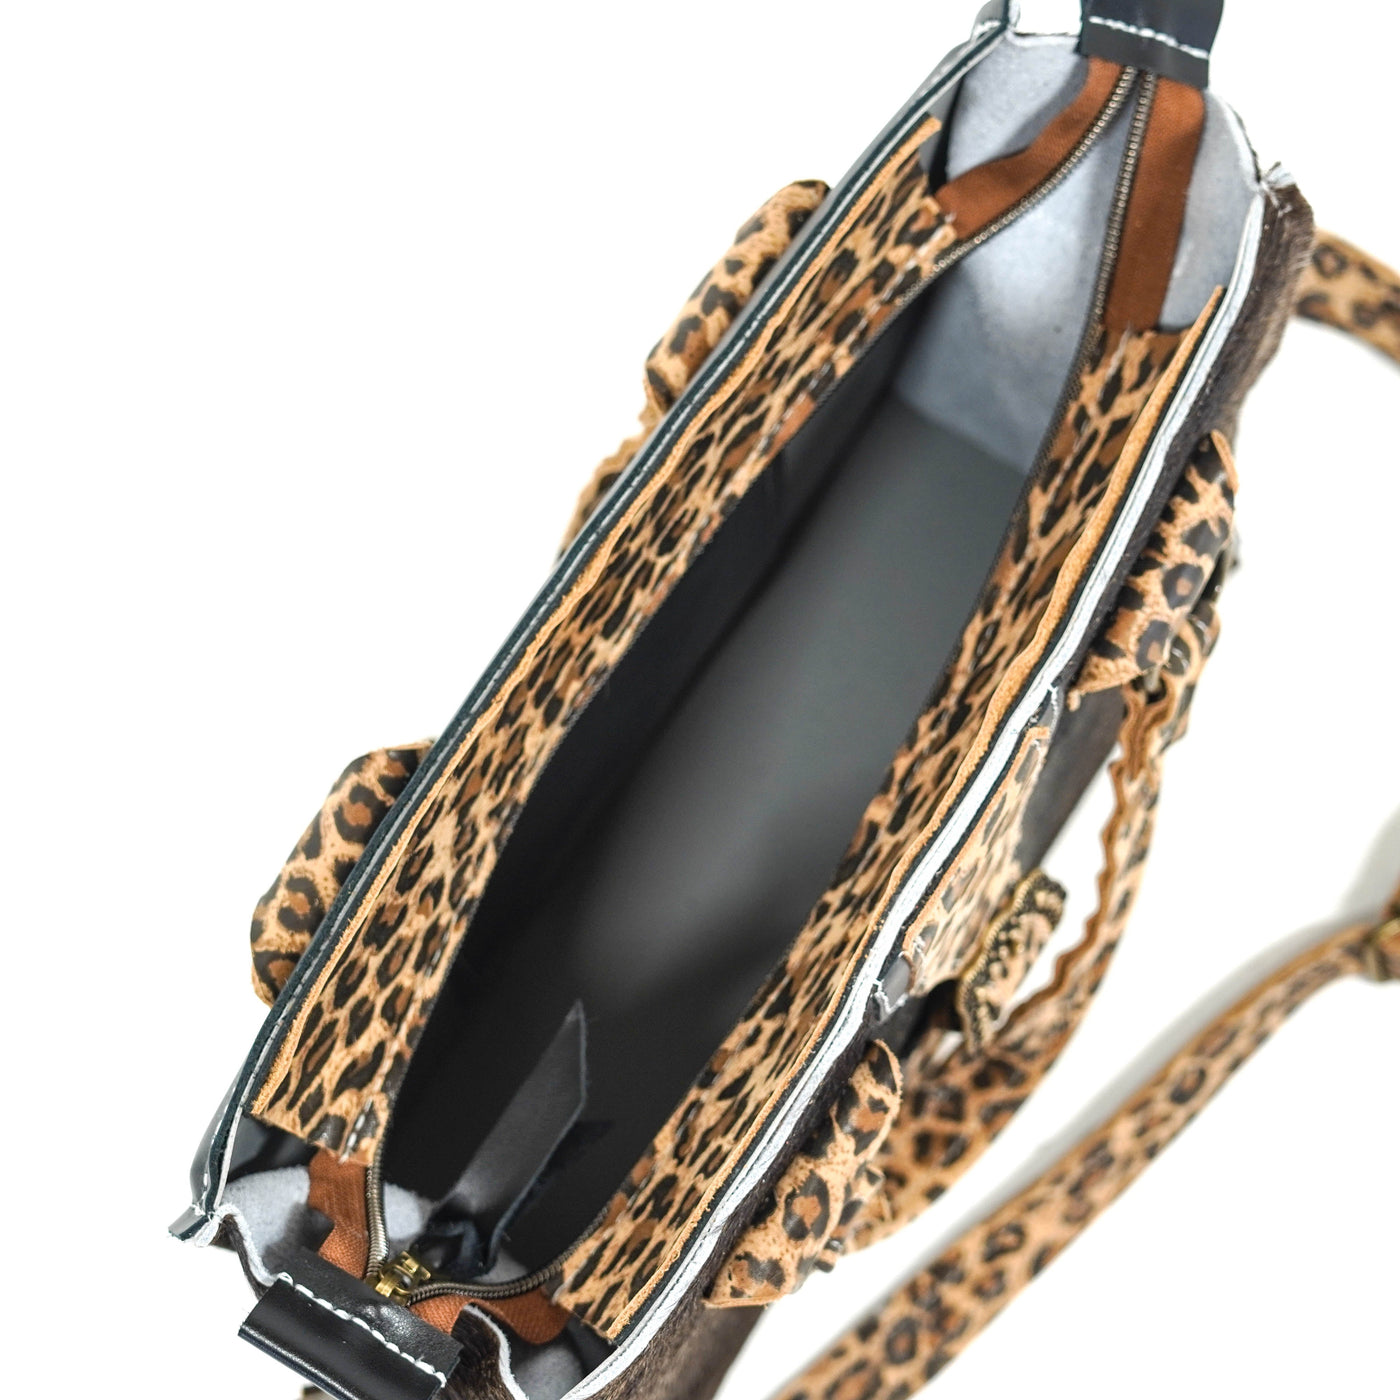 Minnie Pearl - Dark Brindle w/ Leopard Leather-Shania-Western-Cowhide-Bags-Handmade-Products-Gifts-Dancing Cactus Designs